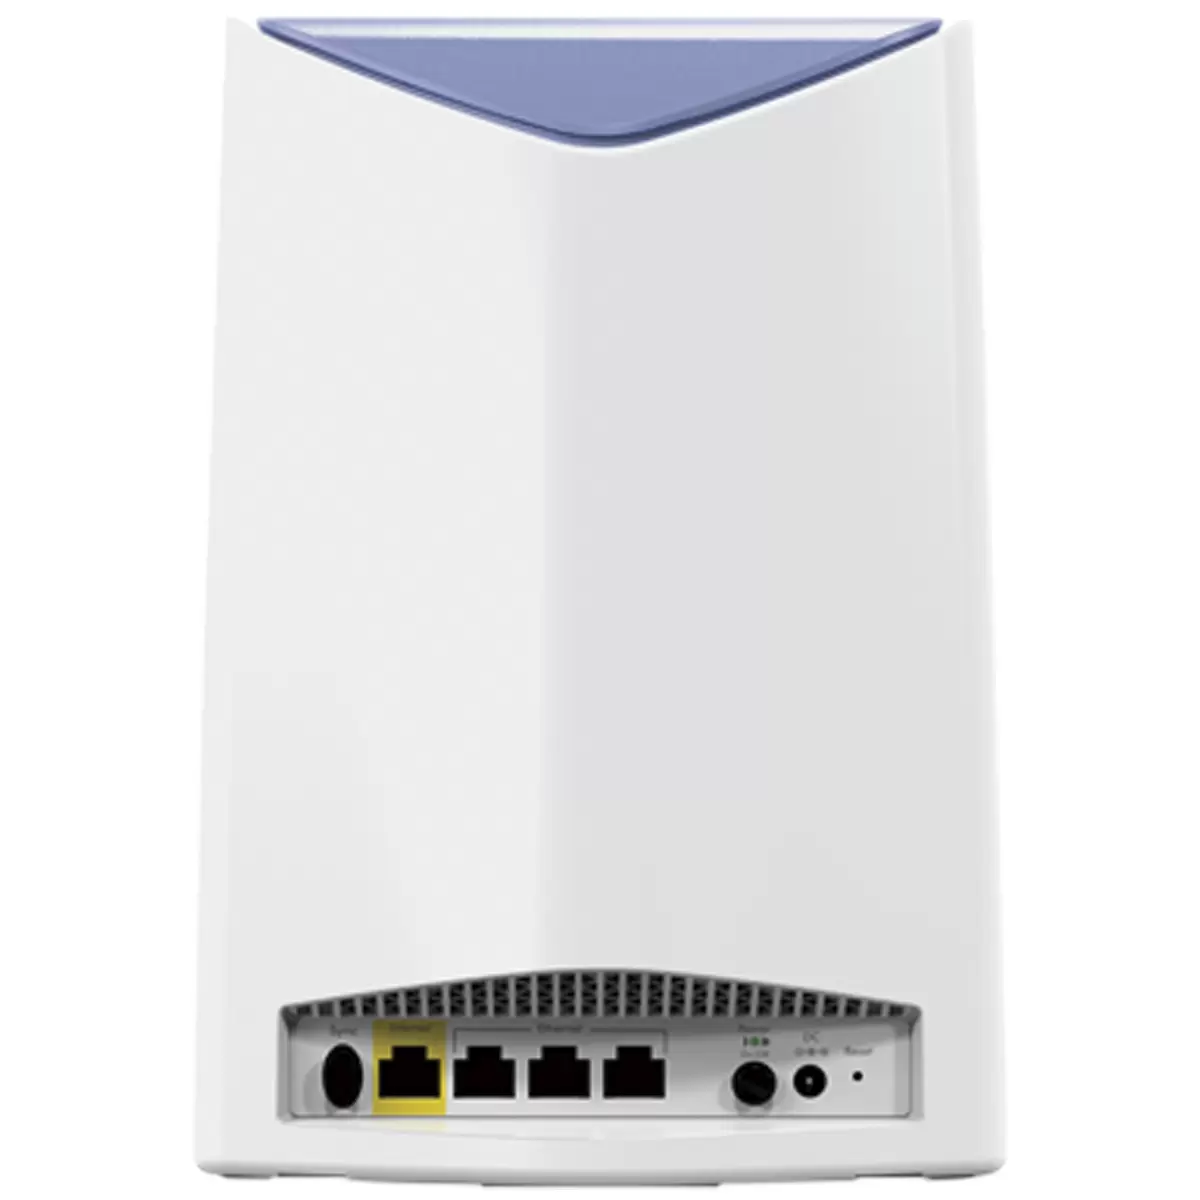 NETGEAR Orbi Pro AC3000 Tri-band Business Mesh WiFi System Bundle 3 Pack SRKS60-100AUS